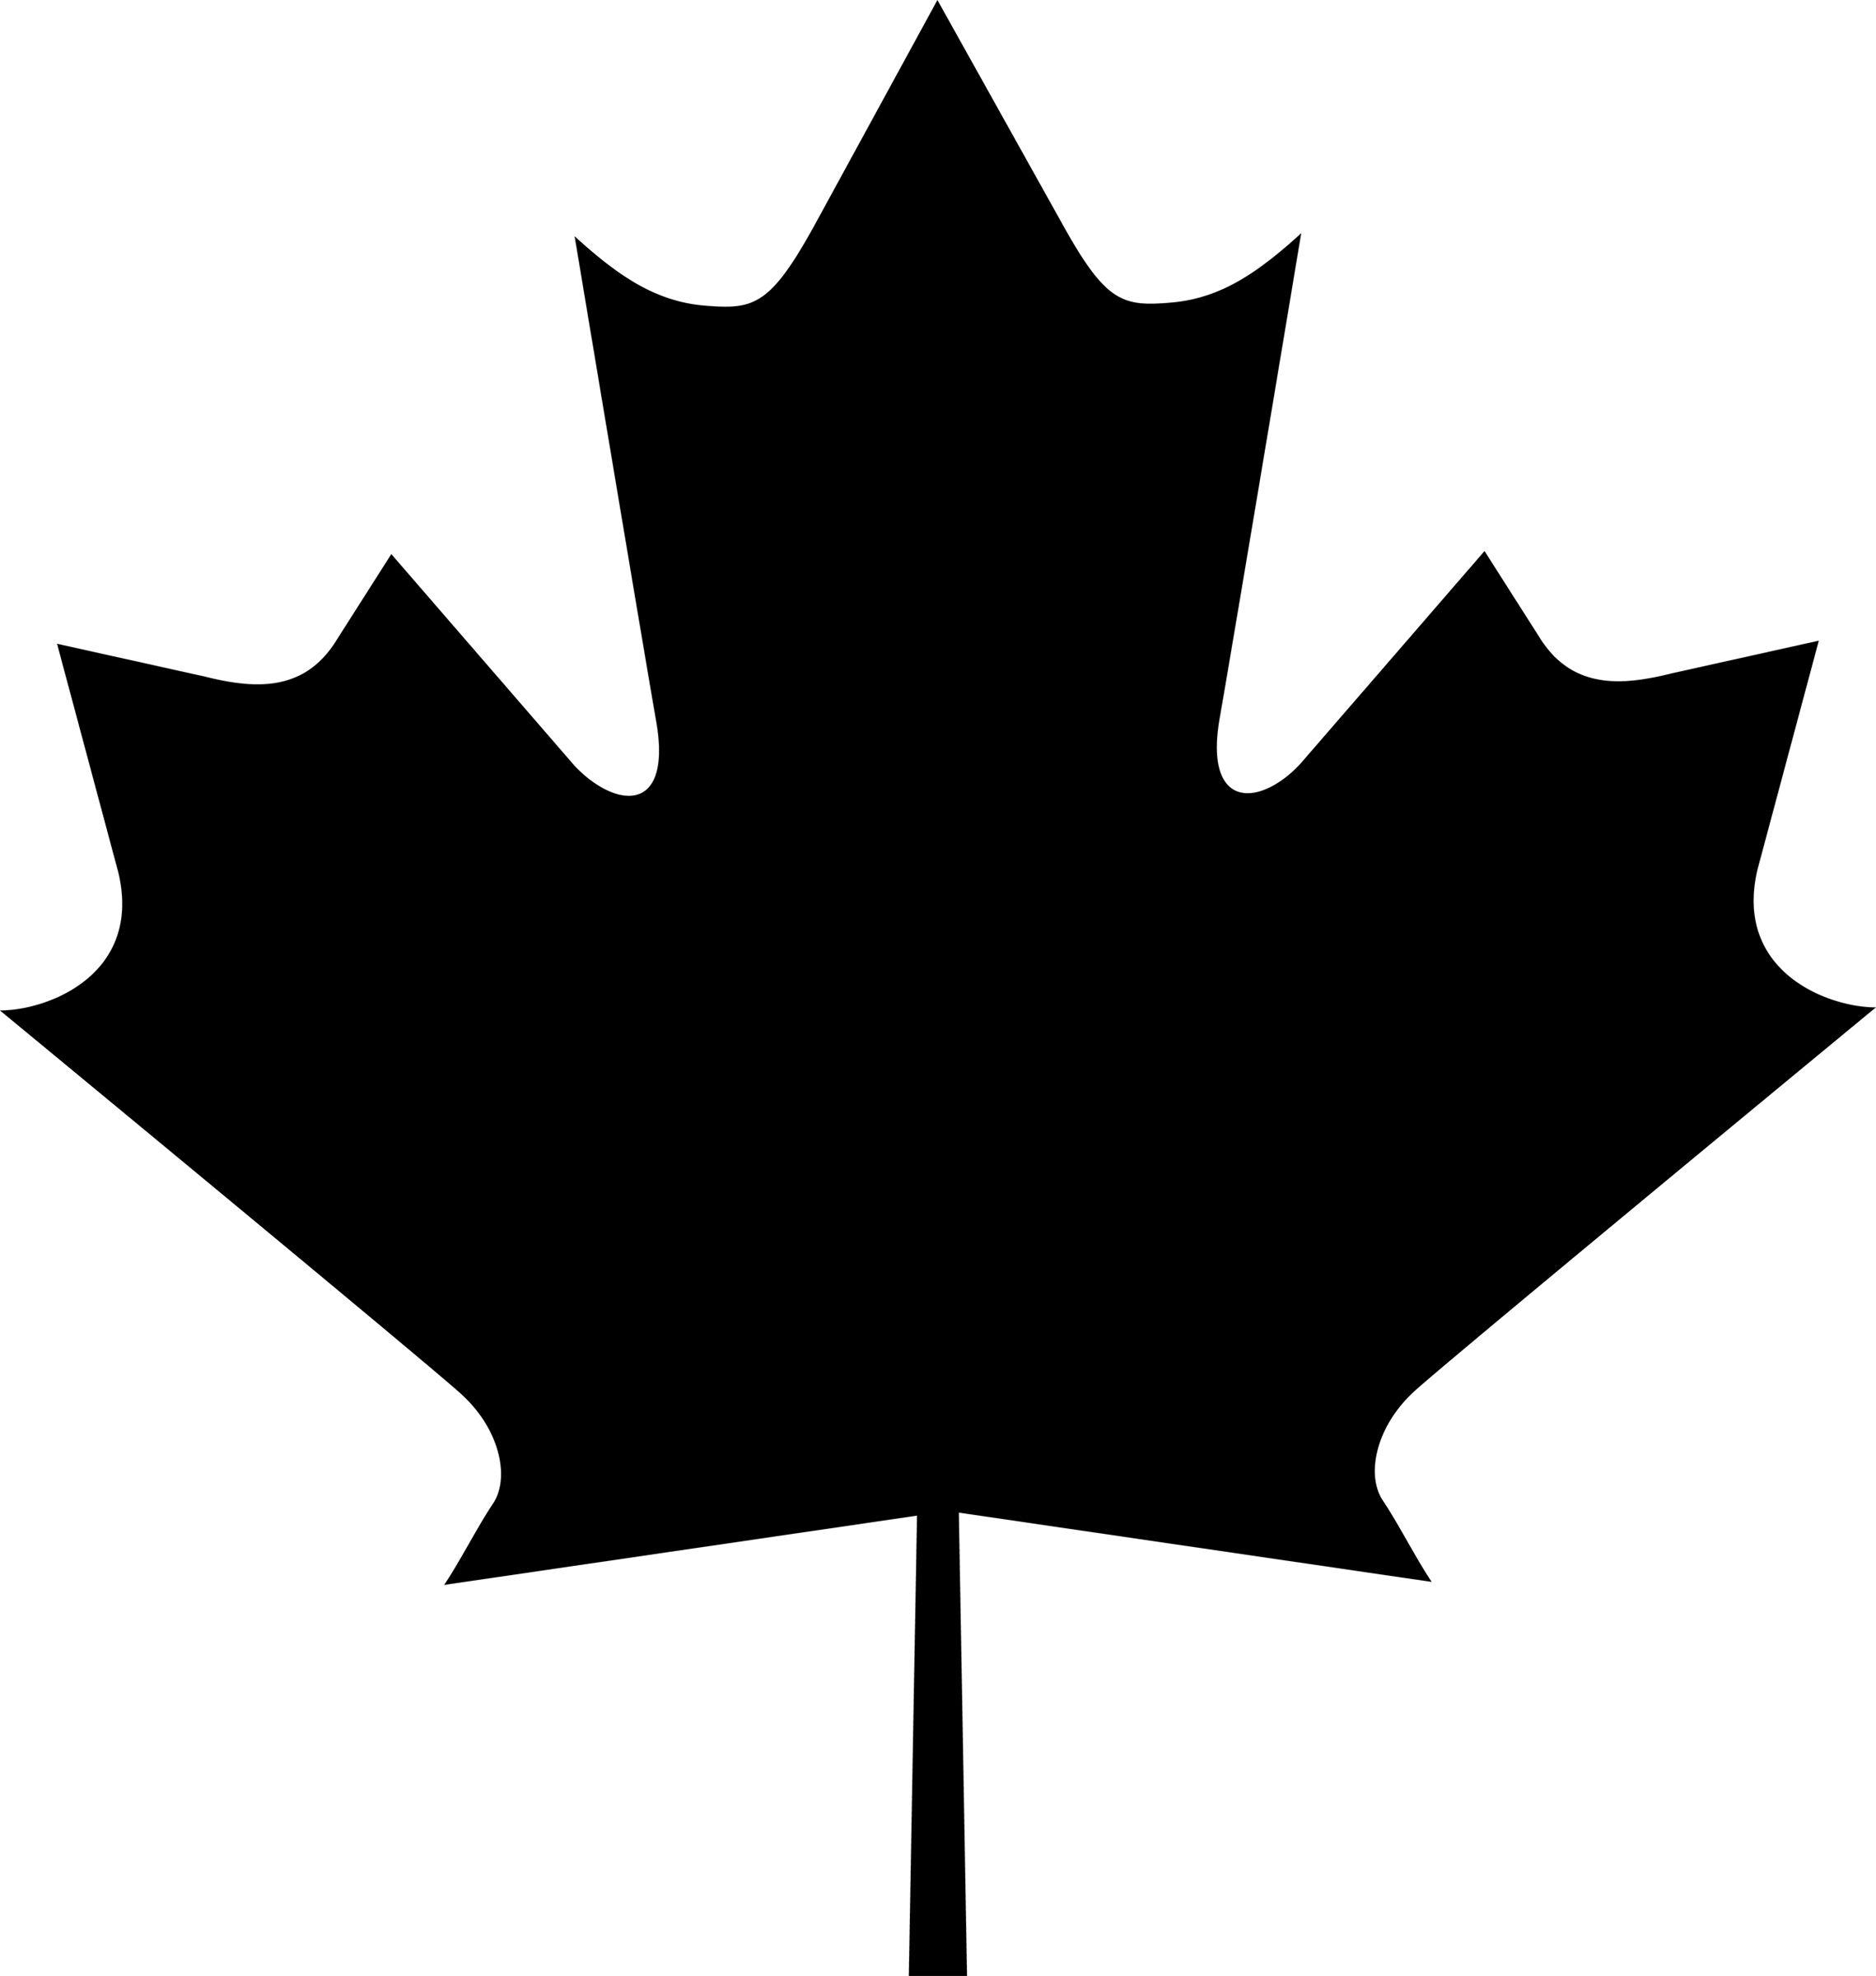 Canadian Maple Leaf Logo - Free Canadian Maple Leaf, Download Free Clip Art, Free Clip Art on ...